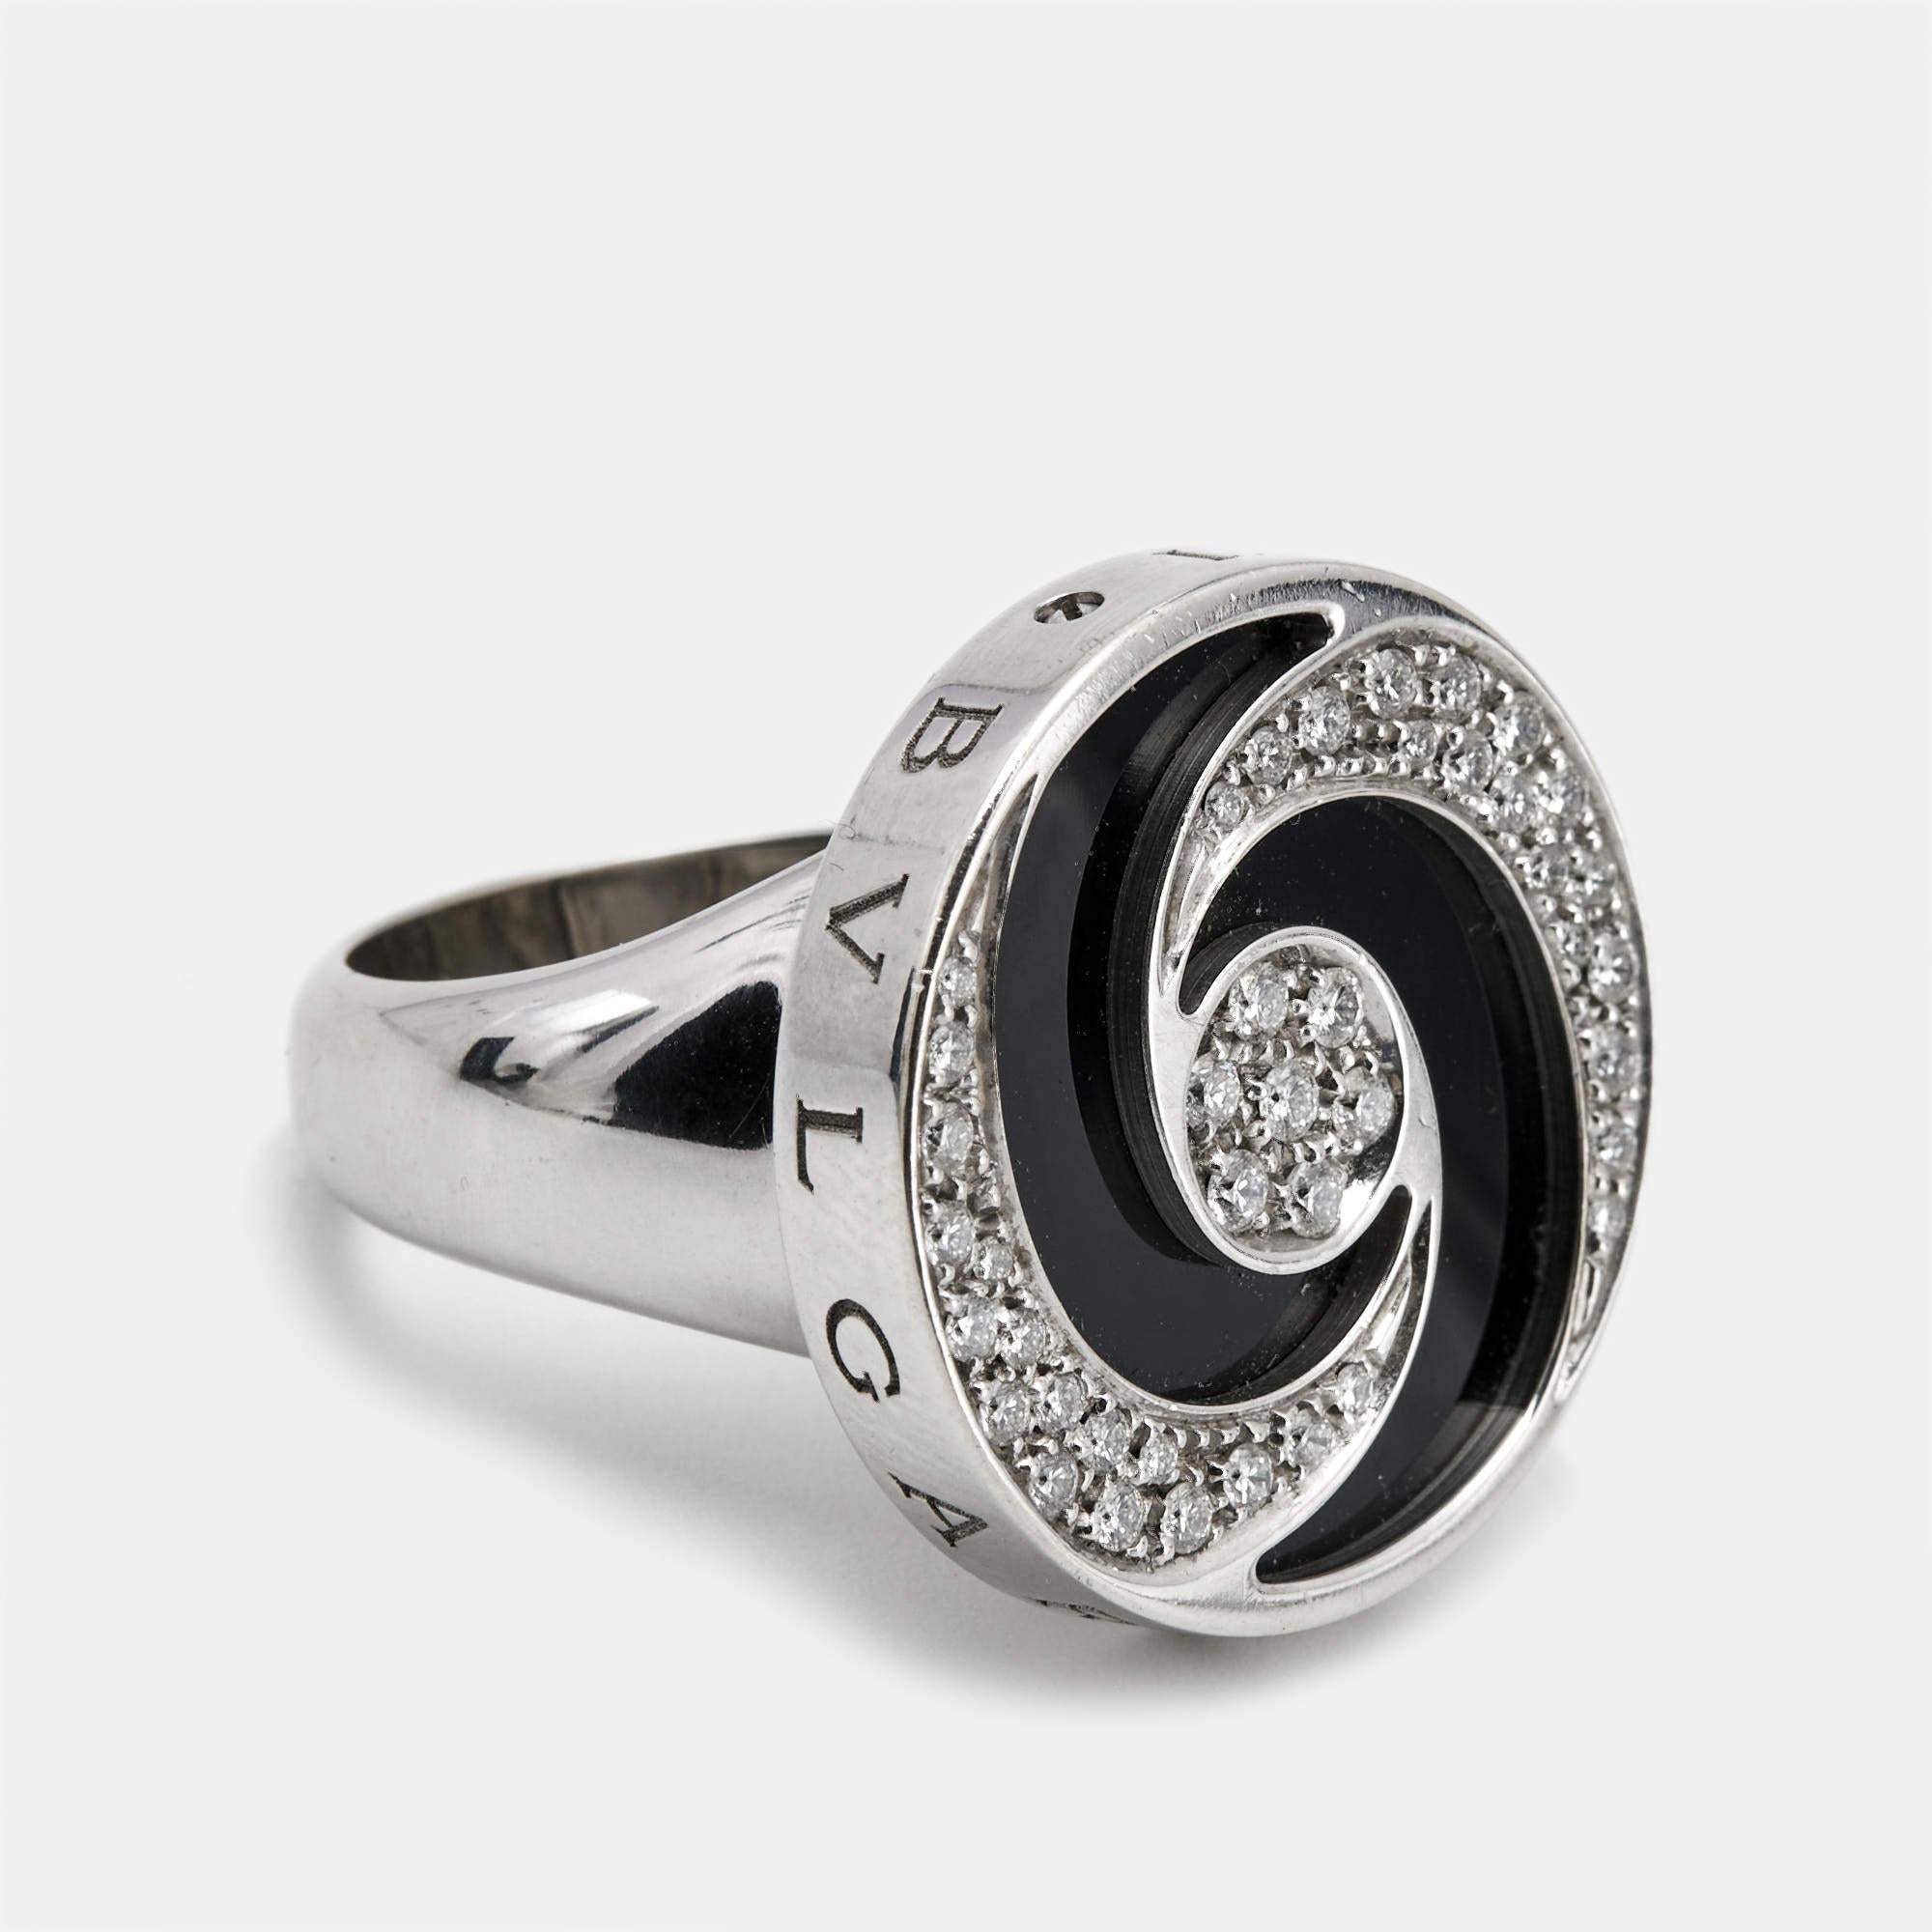 Women's Bvlgari Optical Illusion White Gold and Black Onyx Ring Size 55